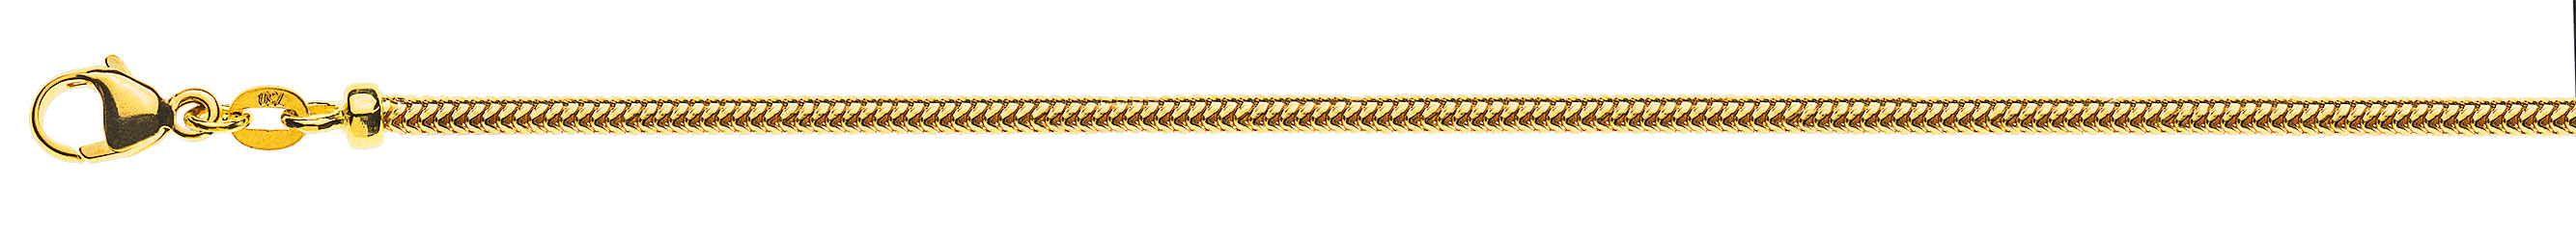 AURONOS Prestige Necklace yellow gold 18K snake chain 50cm 2.4mm